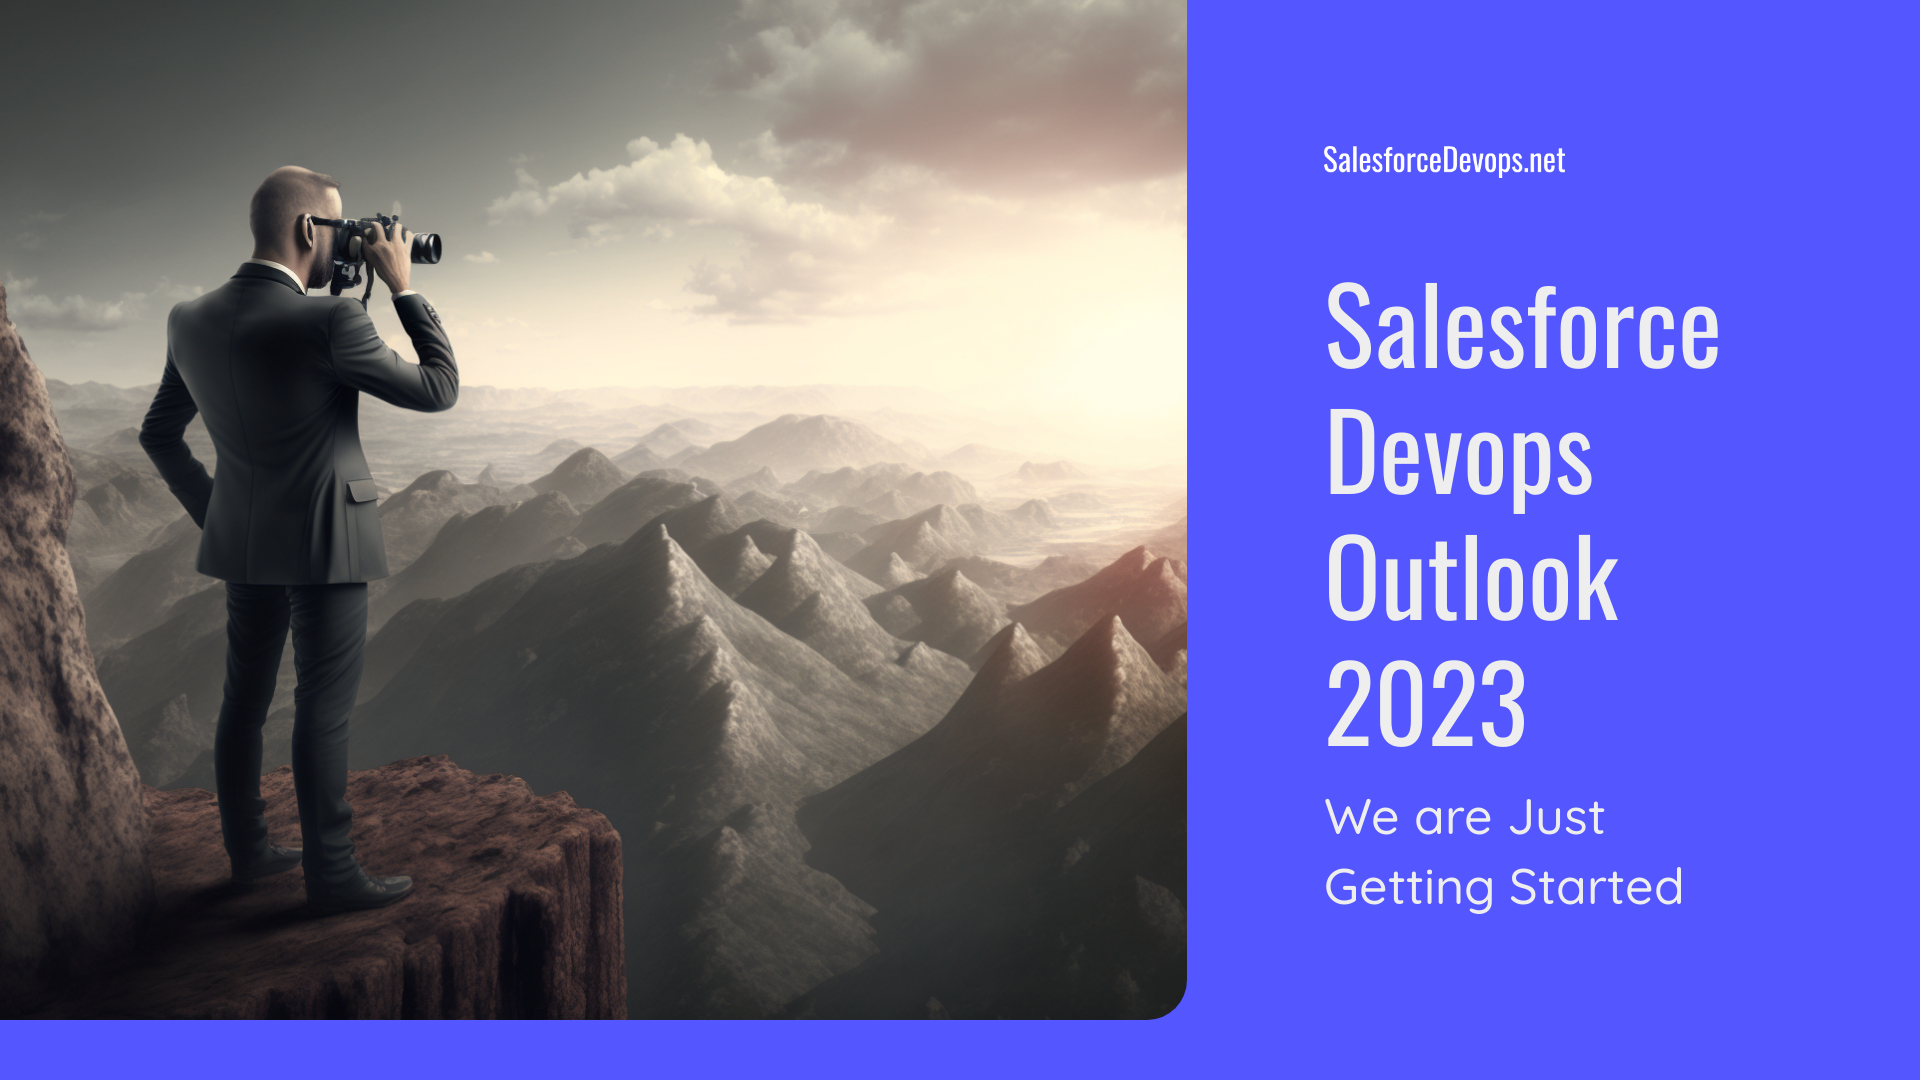 Salesforce Devops Outlook 2023: We are just getting started